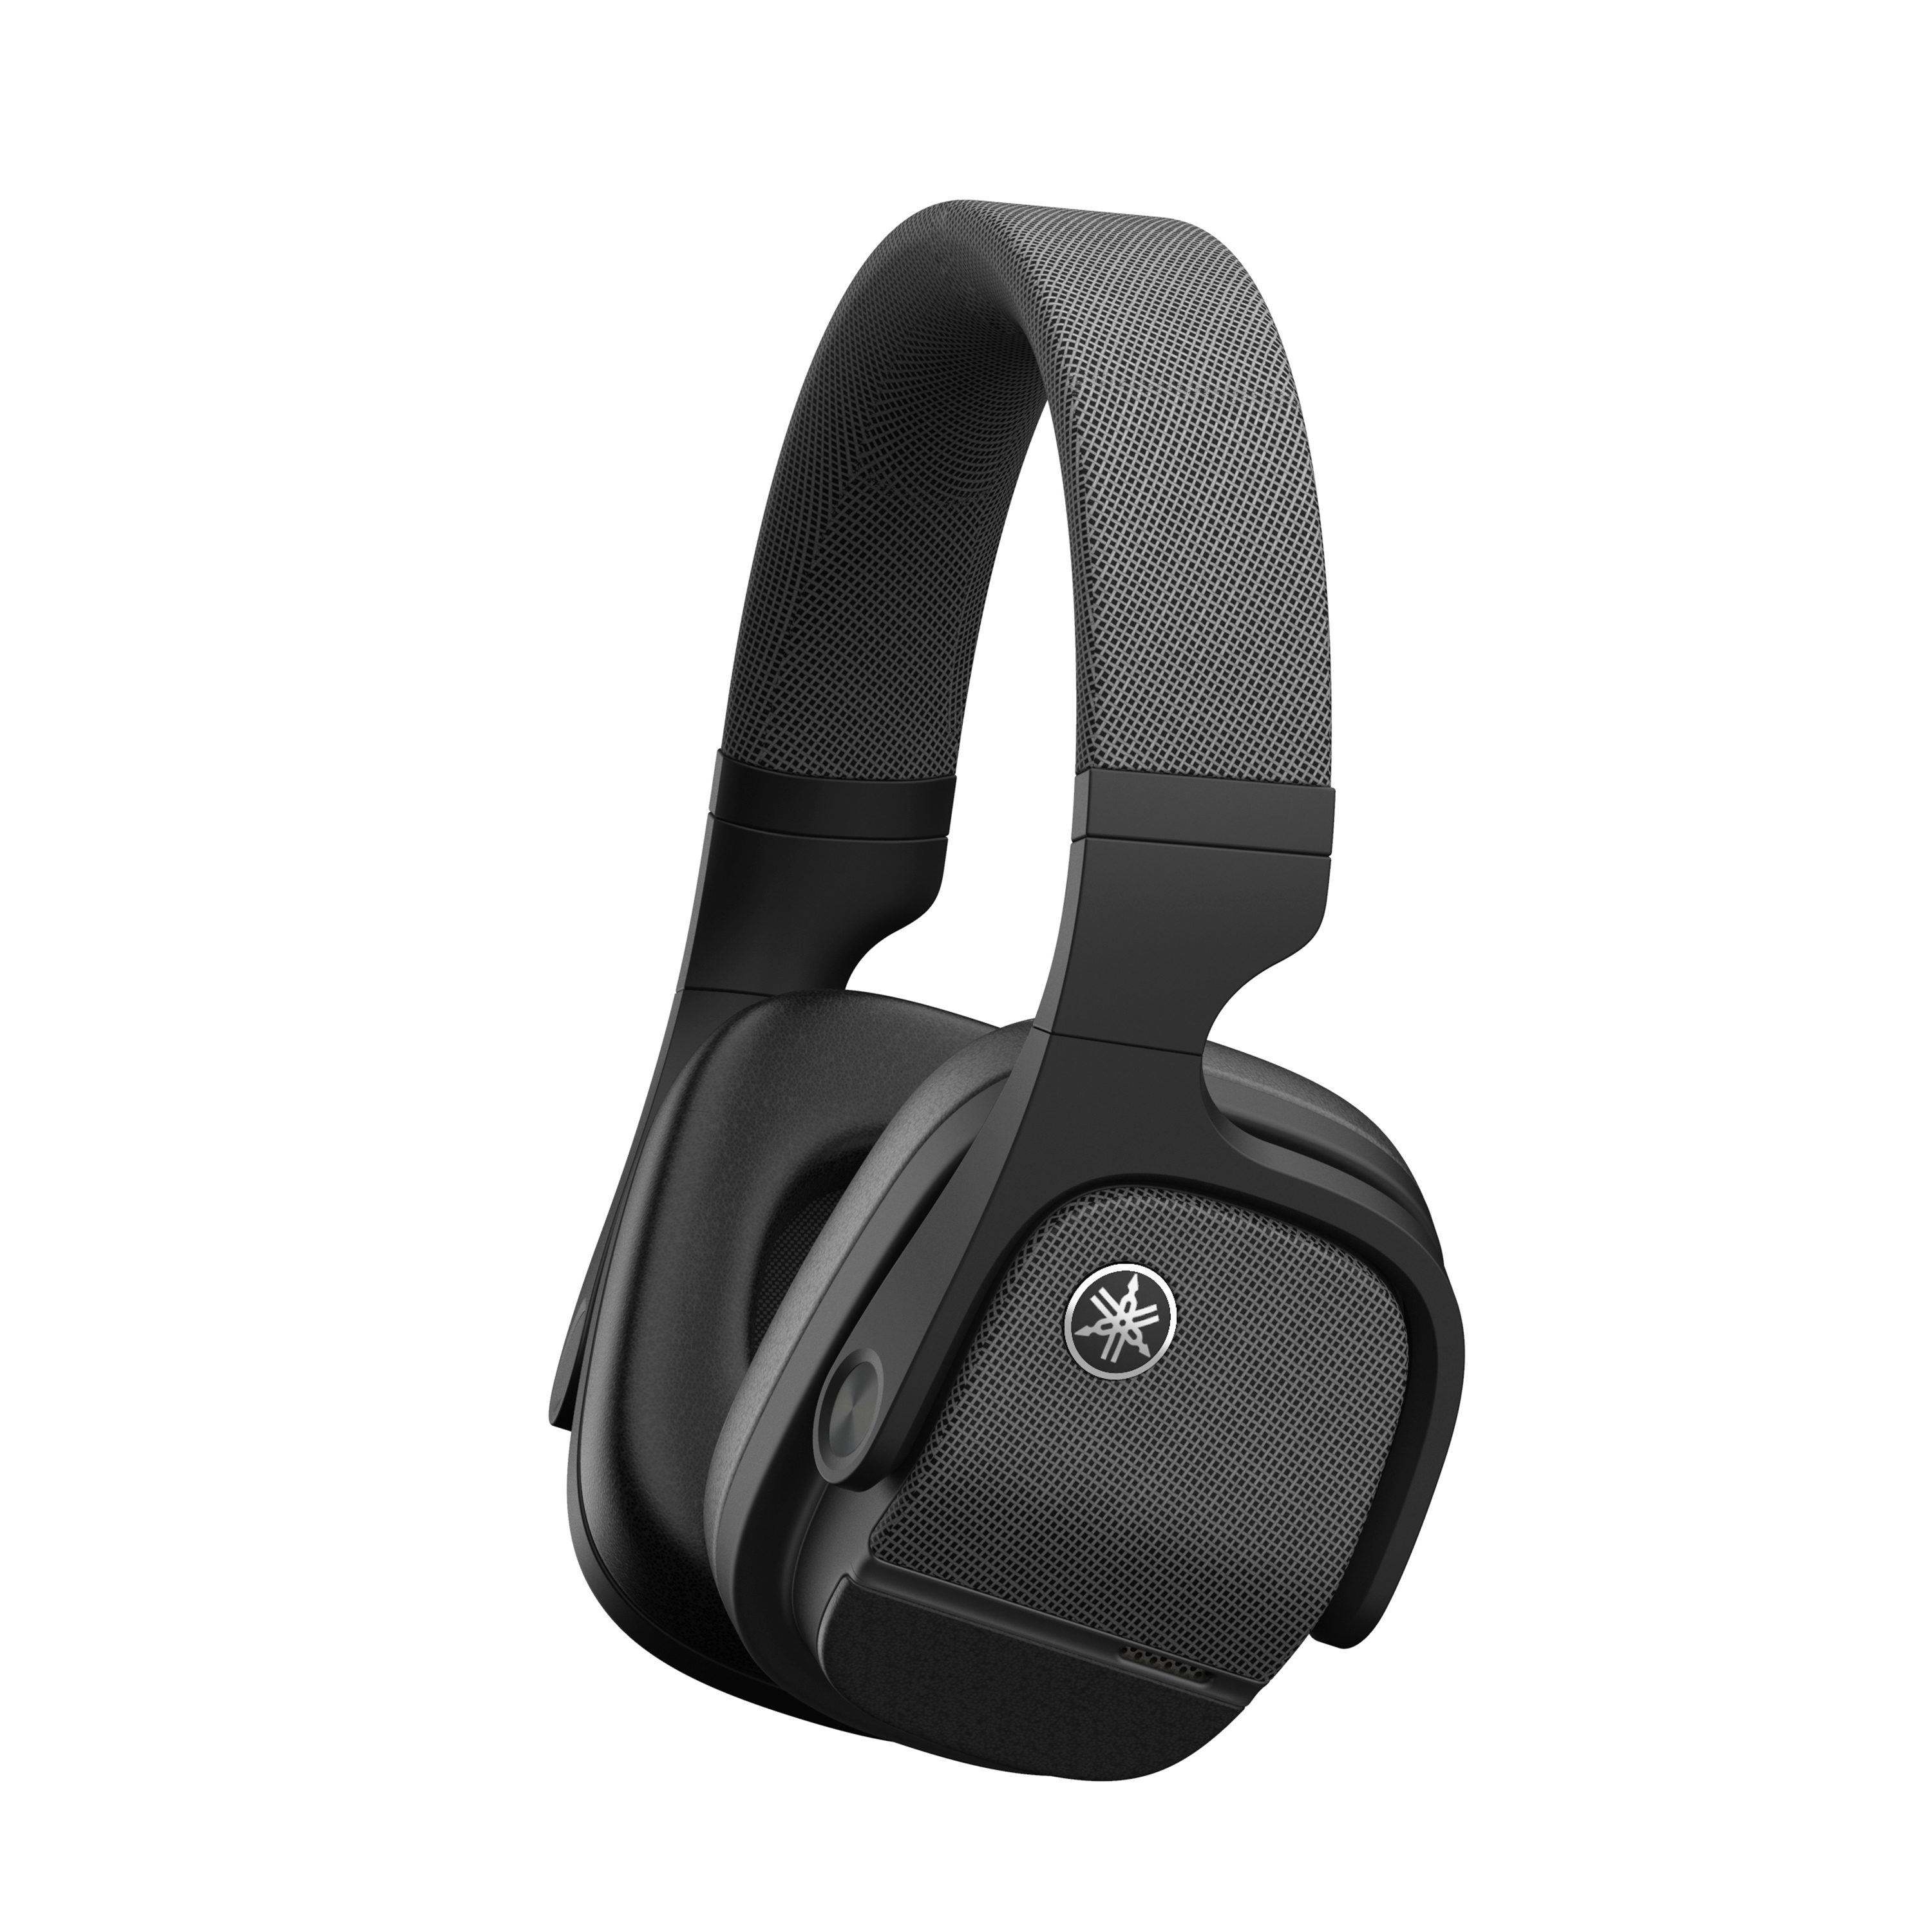 YH-L700A - Overview - Headphones & Earphones - Audio & Visual 